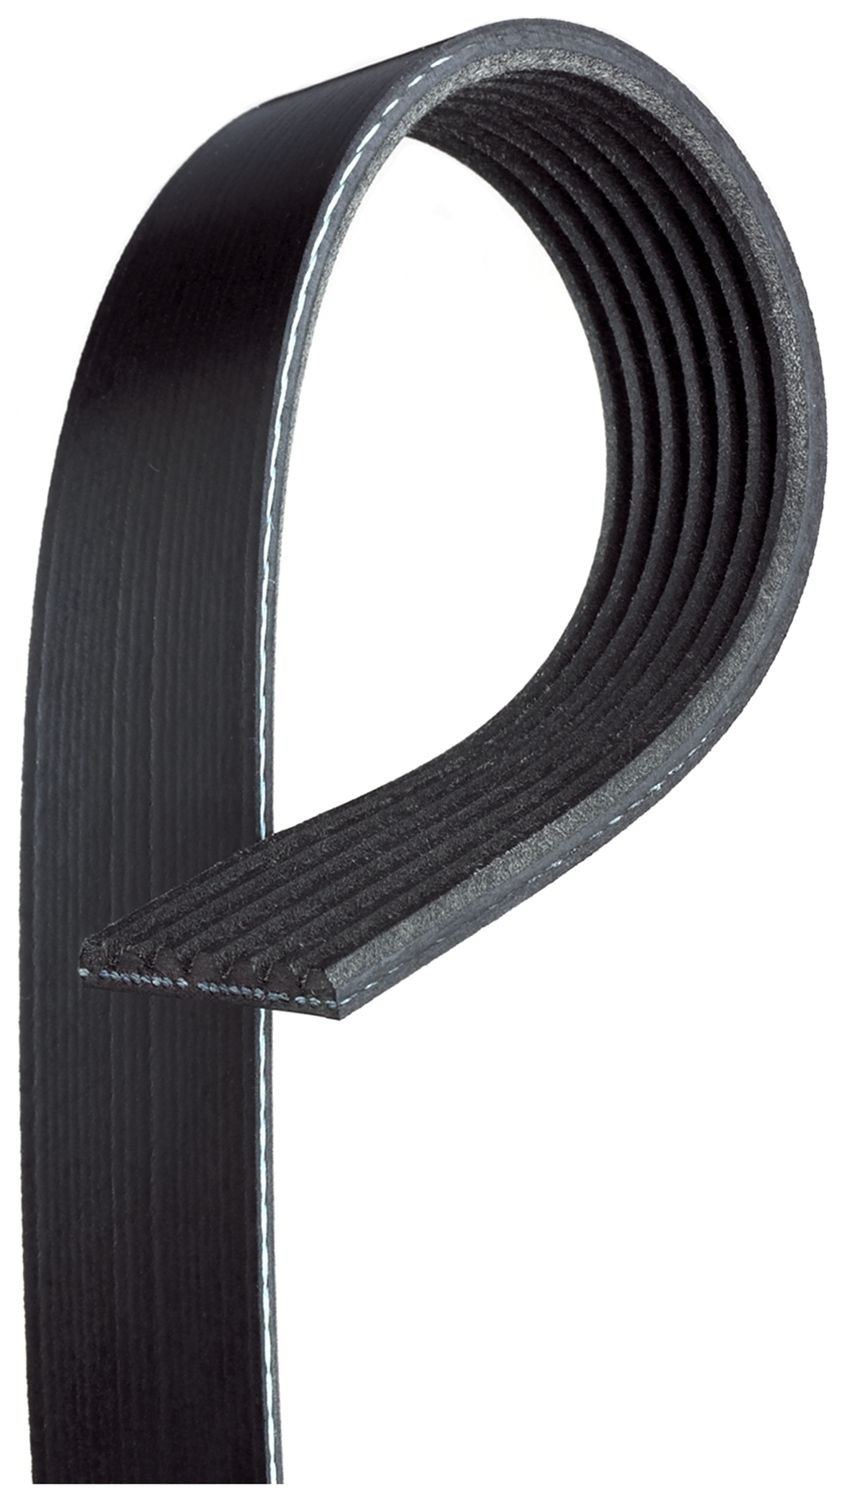 GATES 7PK2285 Serpentine belt 2285mm, 7, G-Force™ C12™ CVT Belt